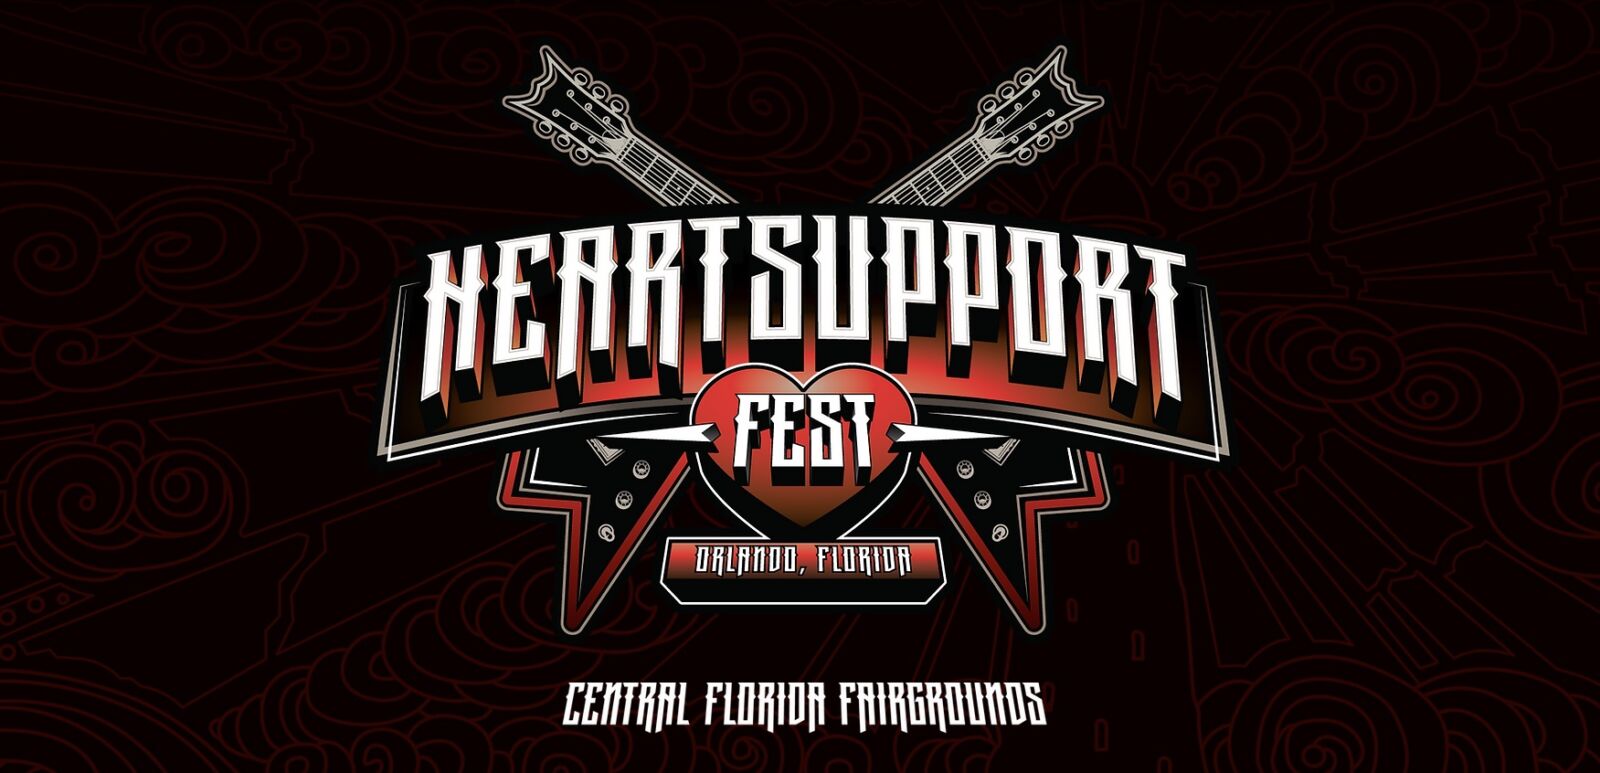 Heartsupportfest